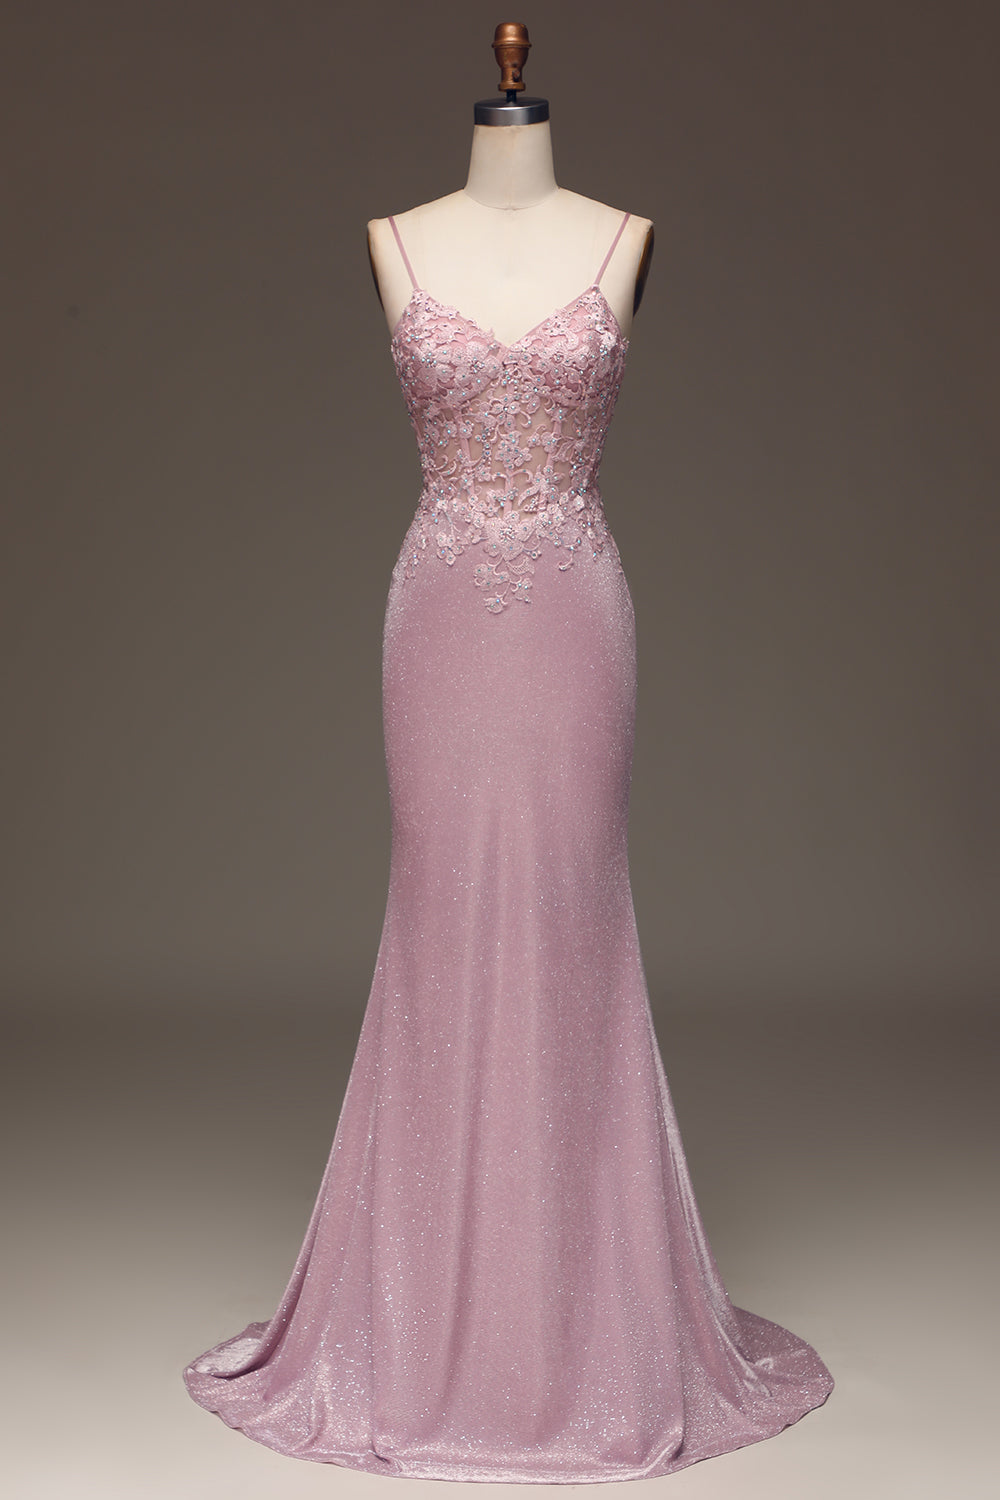 Leely Women Glitter Blush Prom Dress Mermaid Spaghetti Straps Long Party Dress with Beading